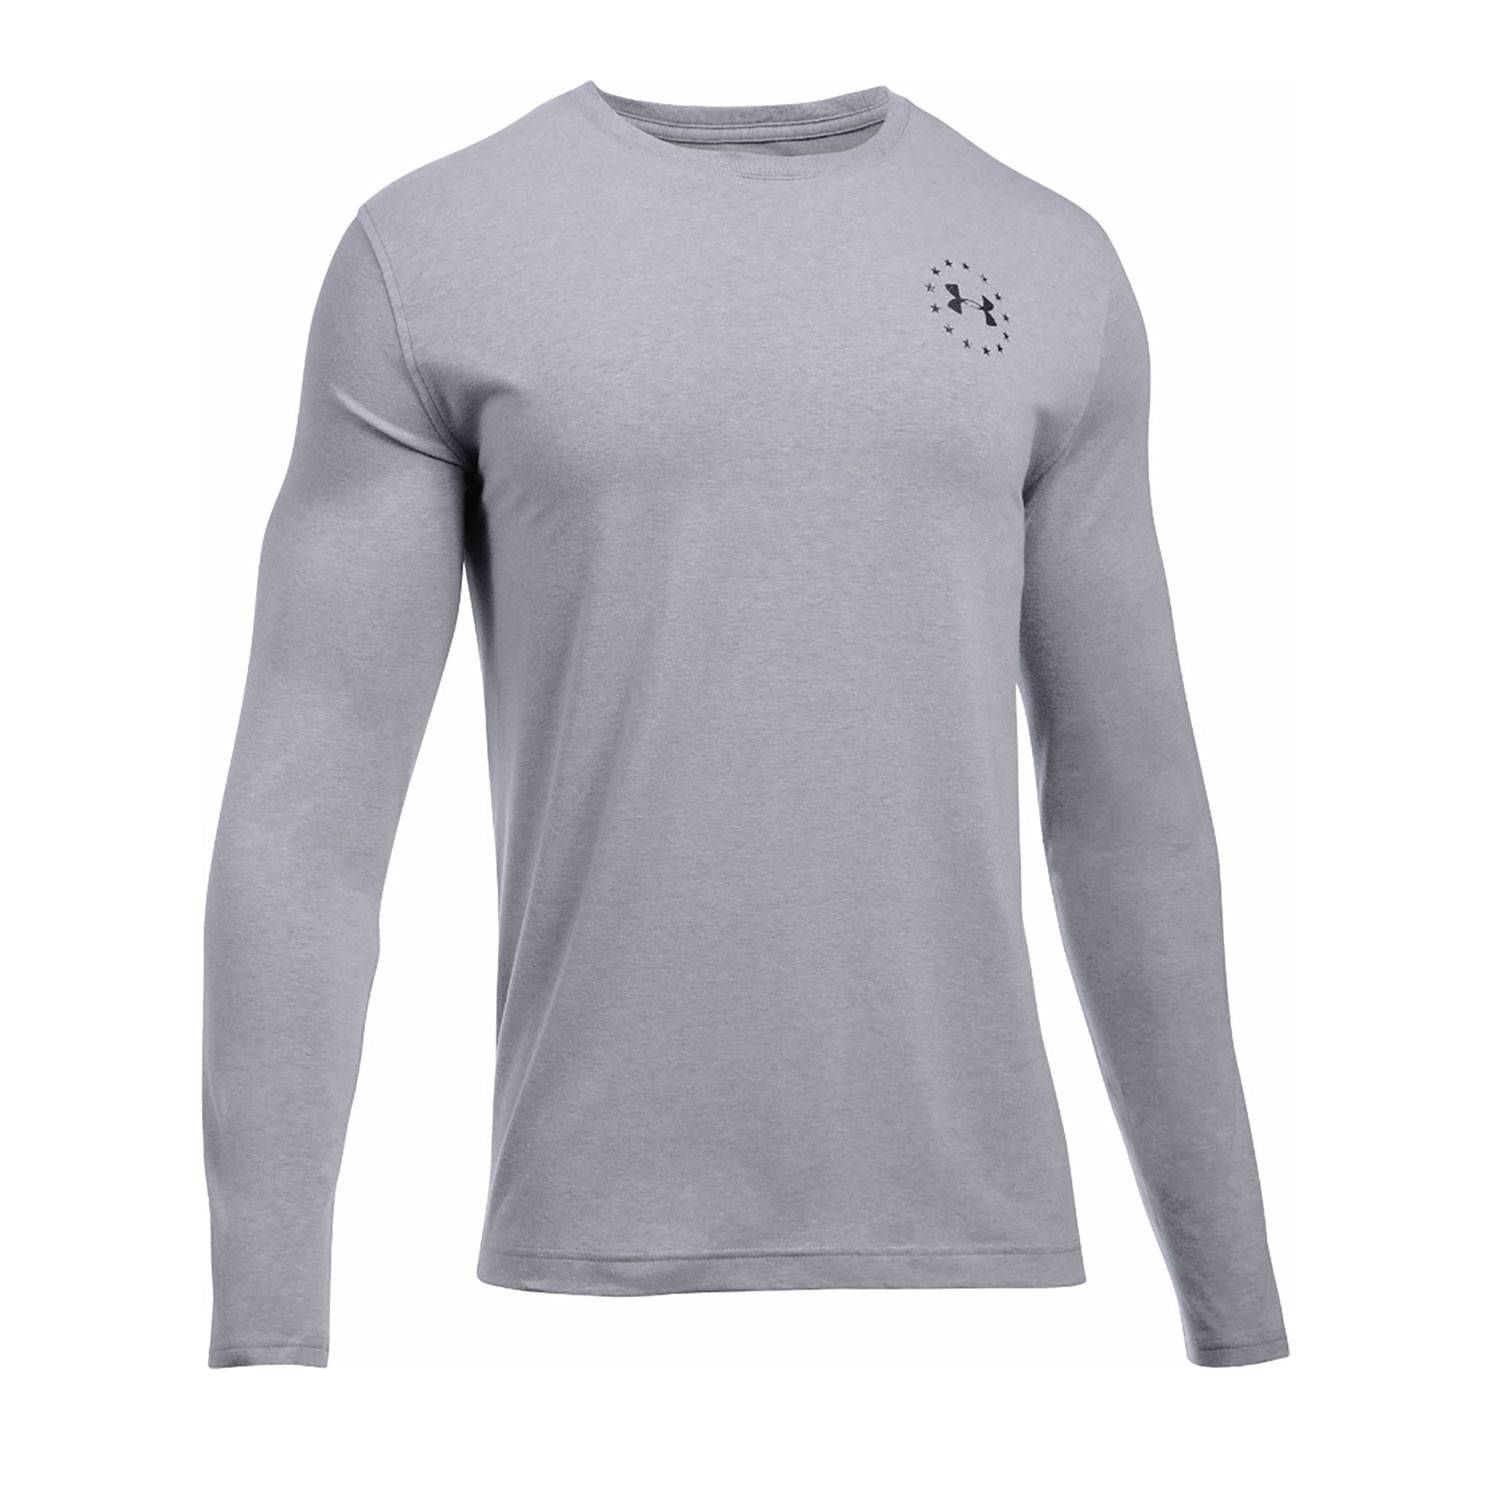 grey under armour t shirt